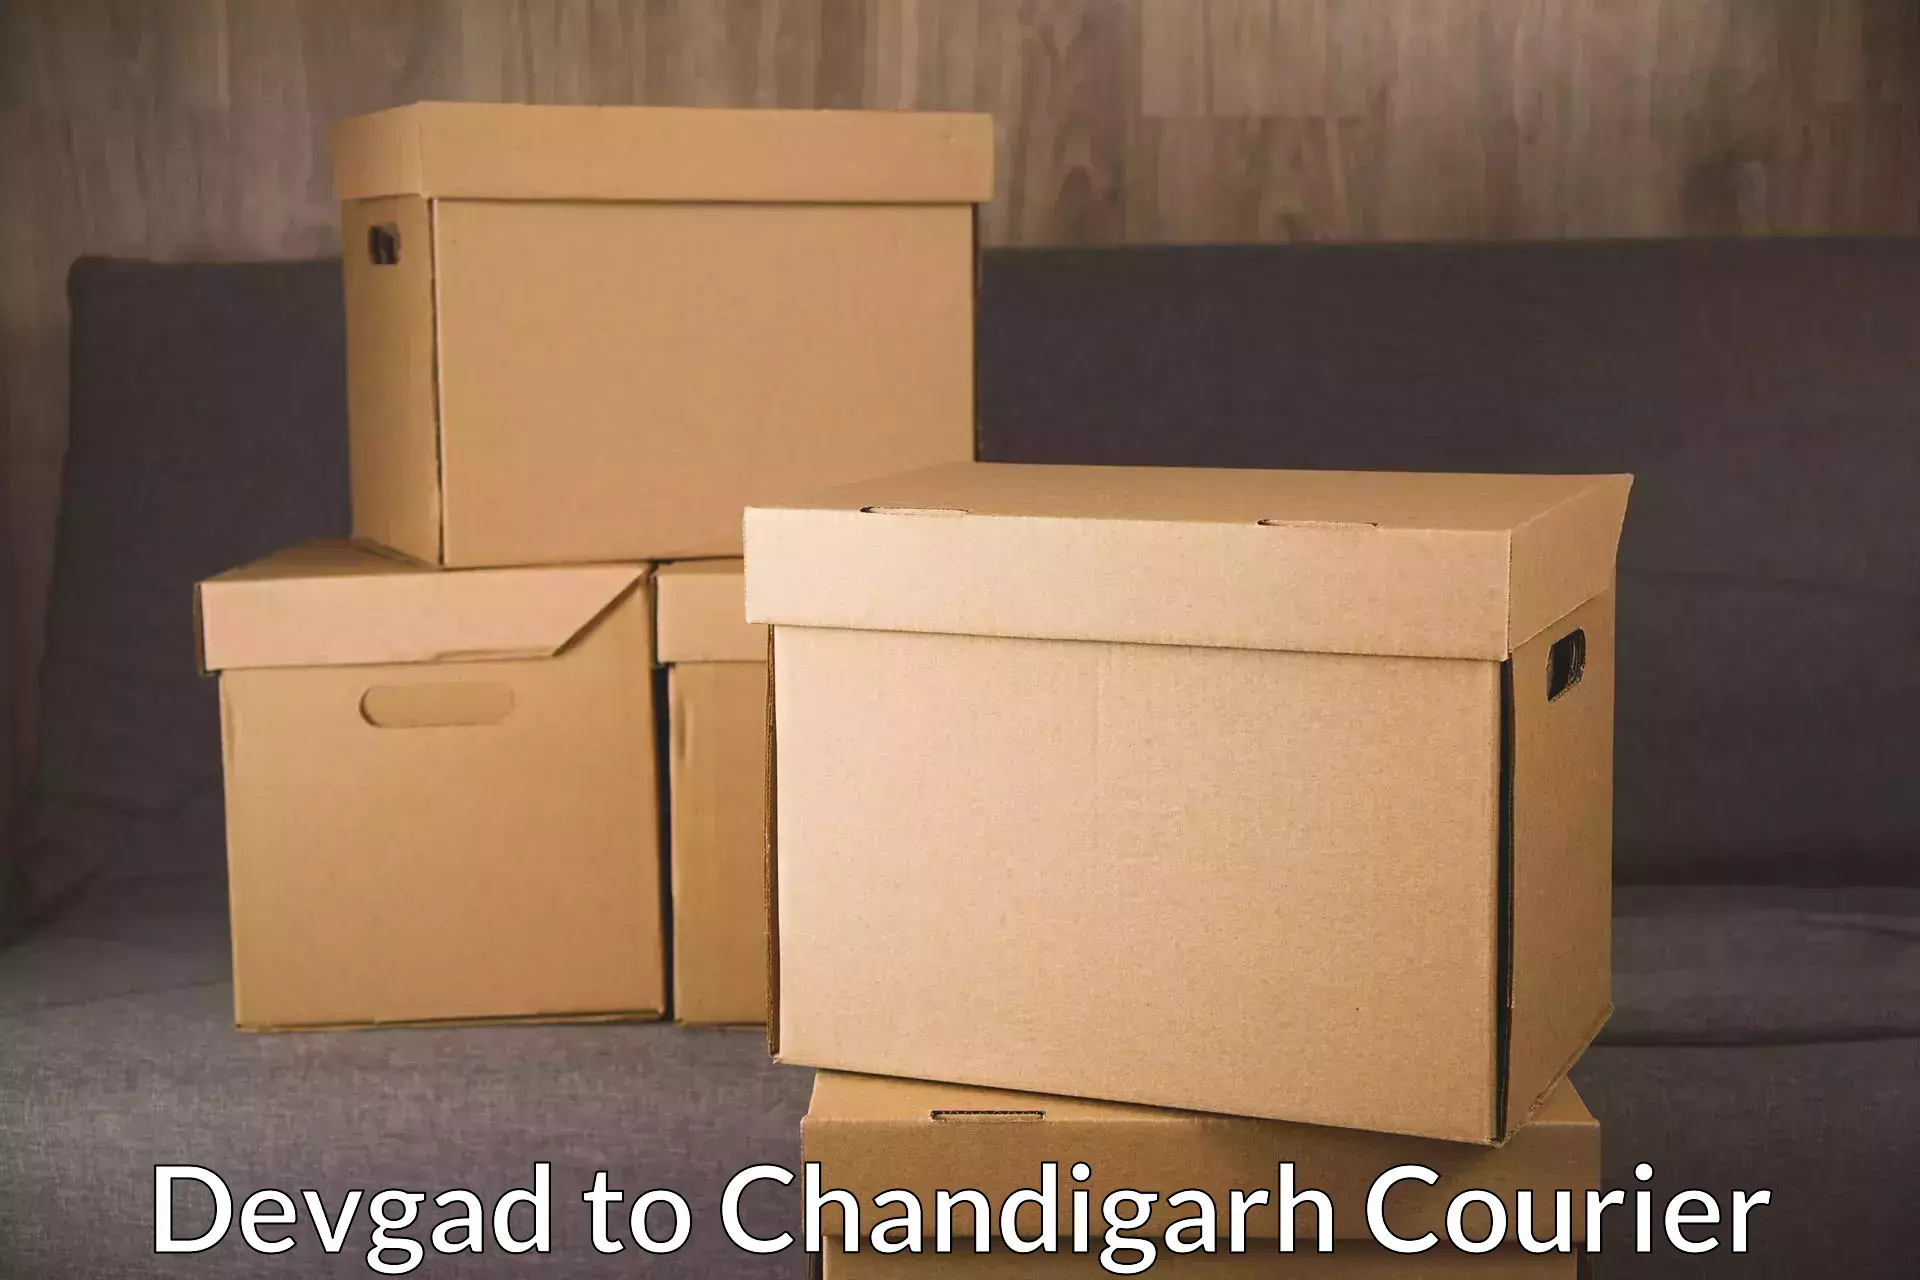 Global logistics network Devgad to Chandigarh